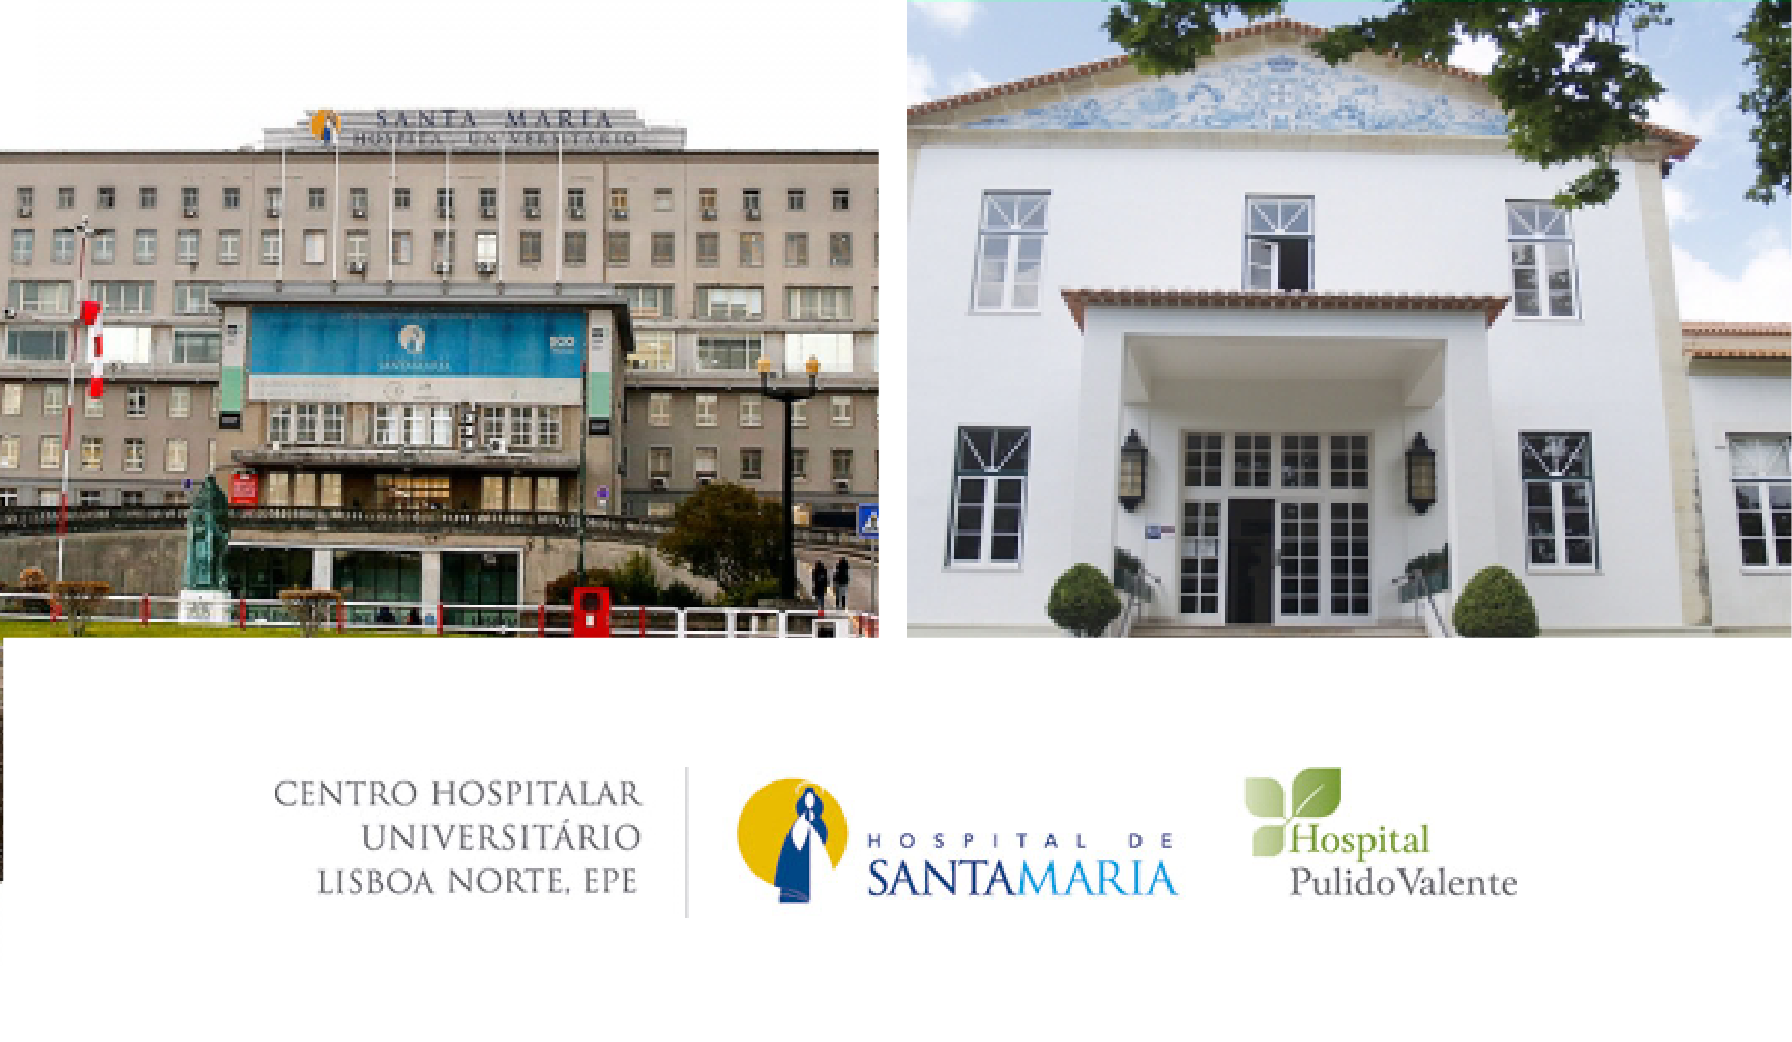 Hospital de Santa Maria Lisboa